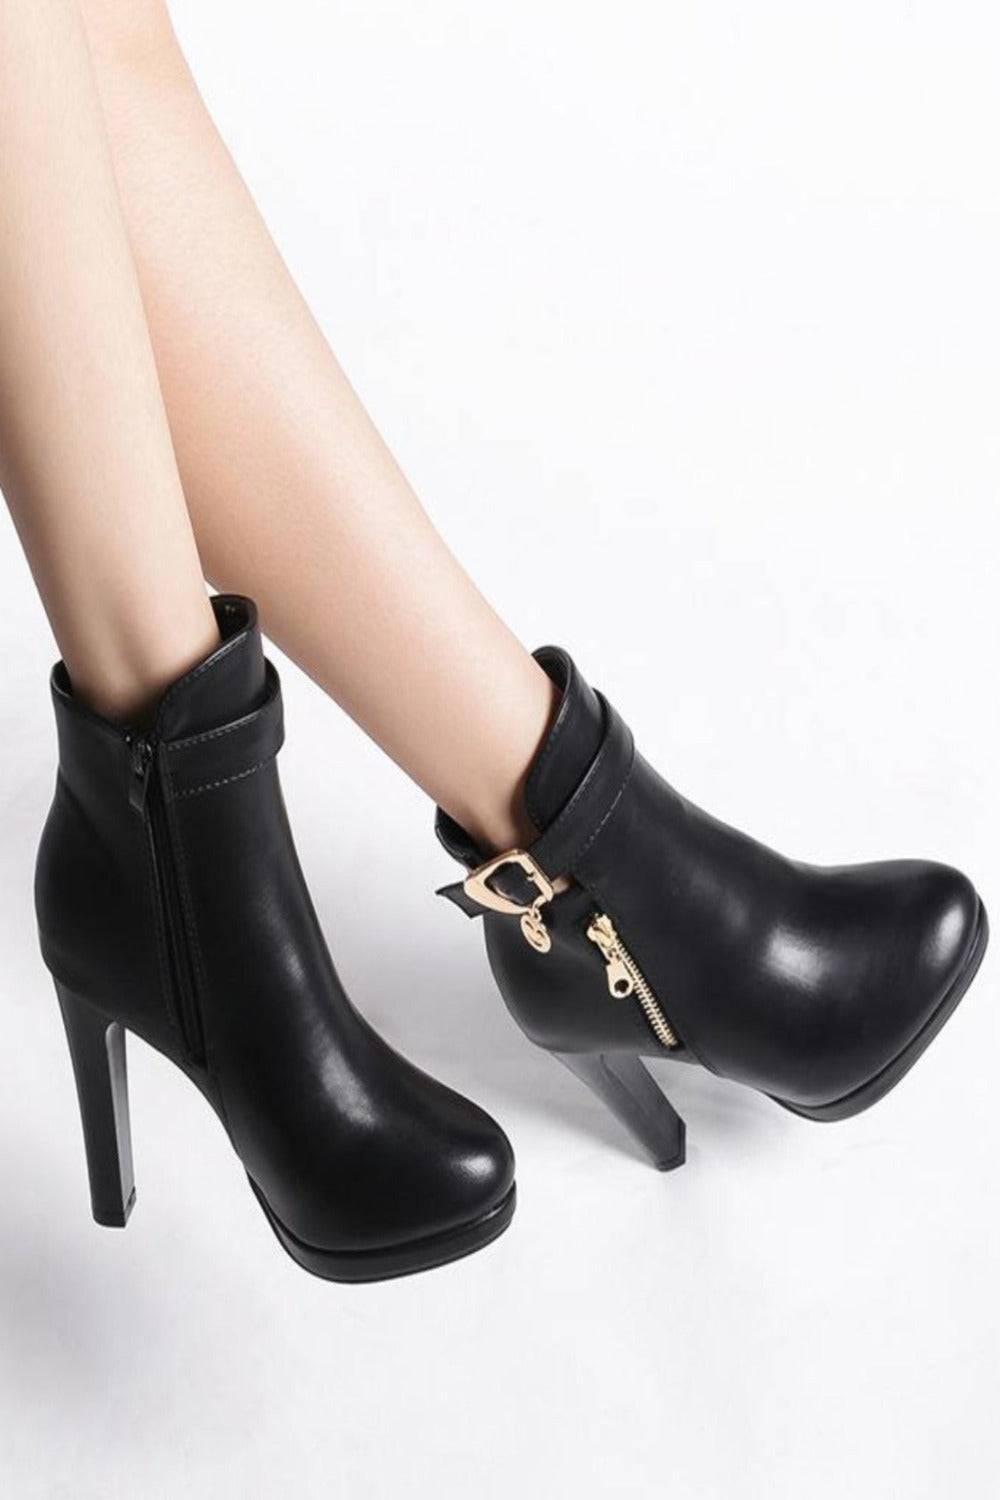 ASOS DESIGN Ending heeled ankle boots in black | ASOS